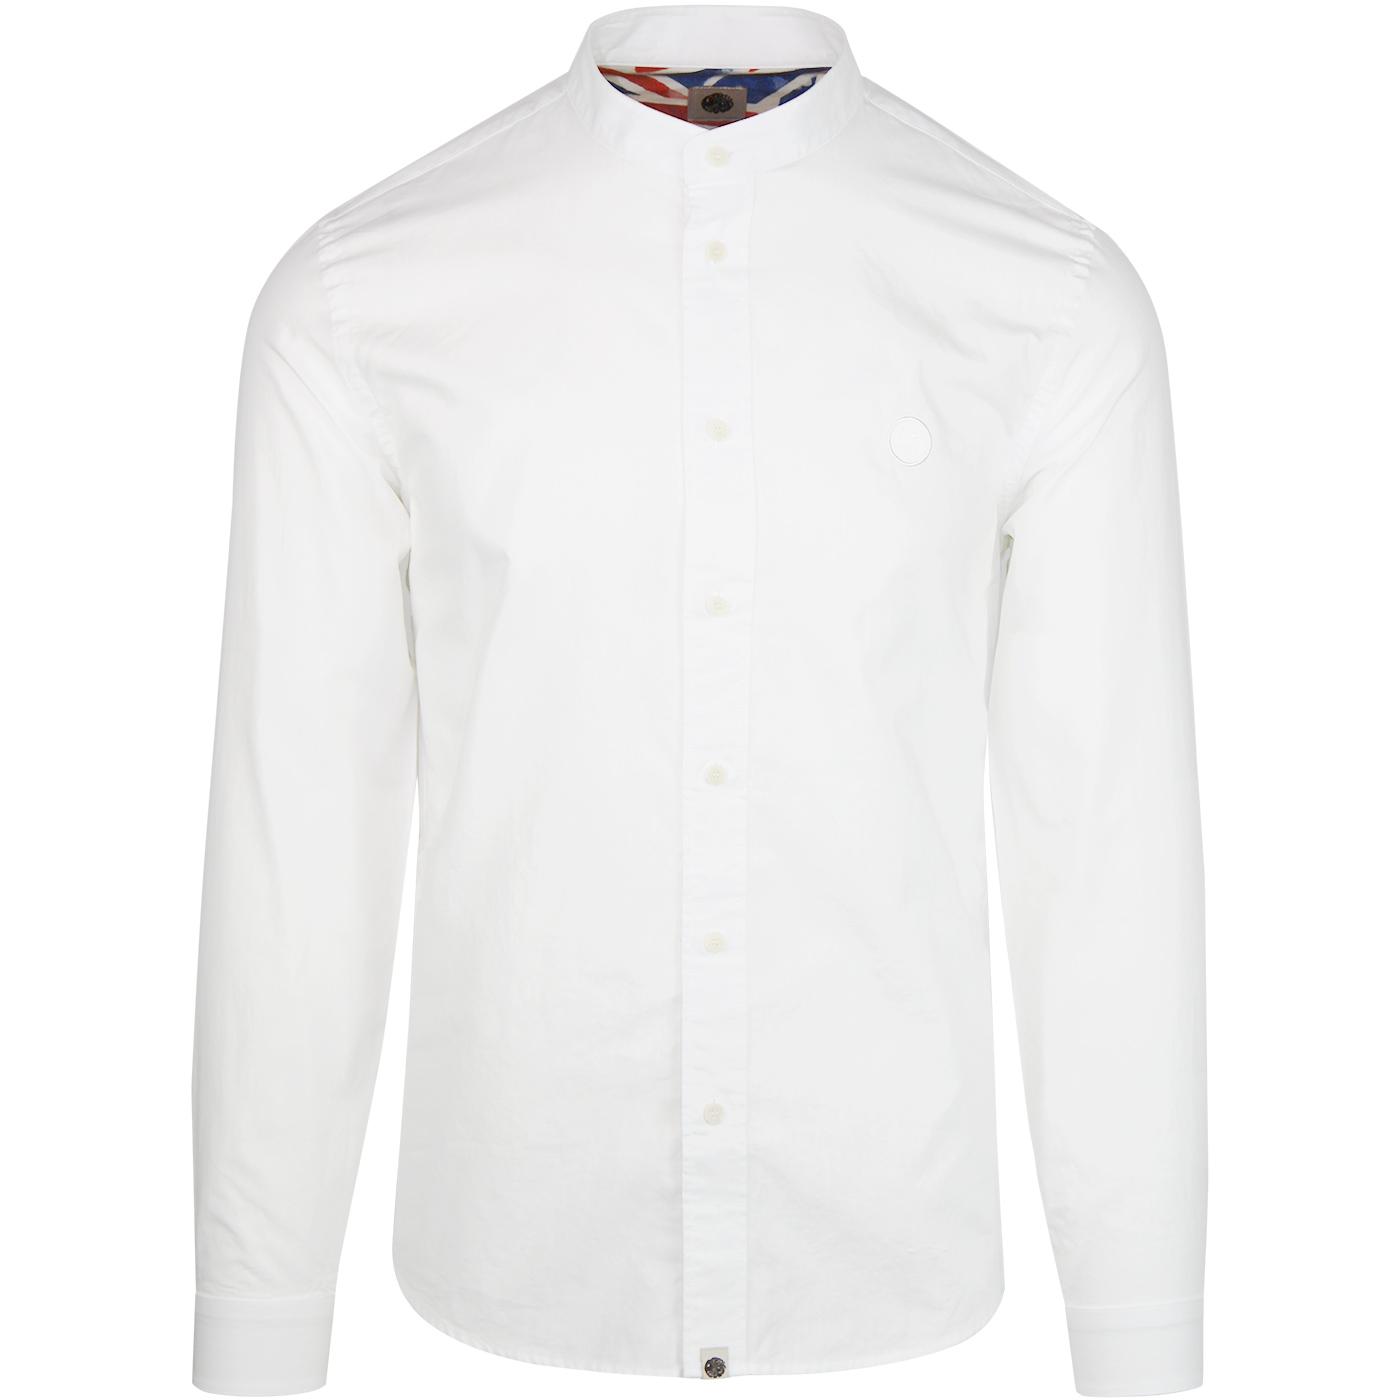 PRETTY GREEN 1960s Mod Grandad Collar Shirt WHITE